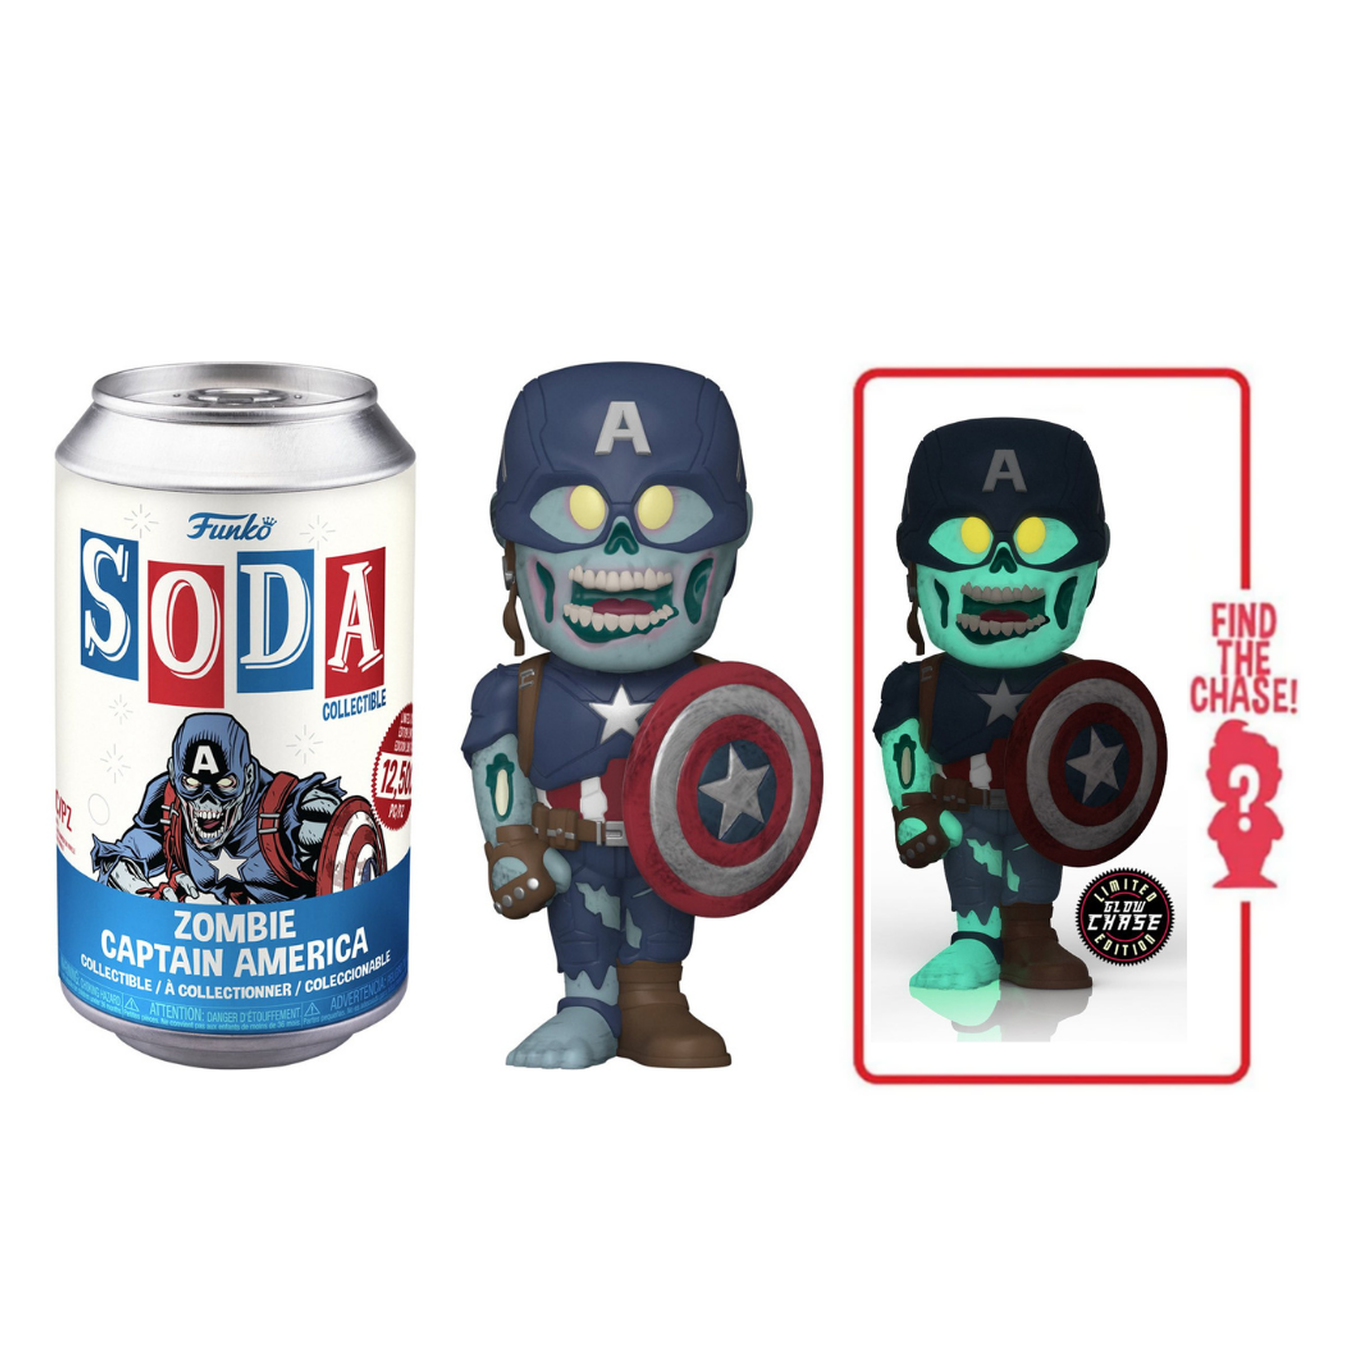 Vinyl Soda Marvel Zombie Captain America - Chance of Chase